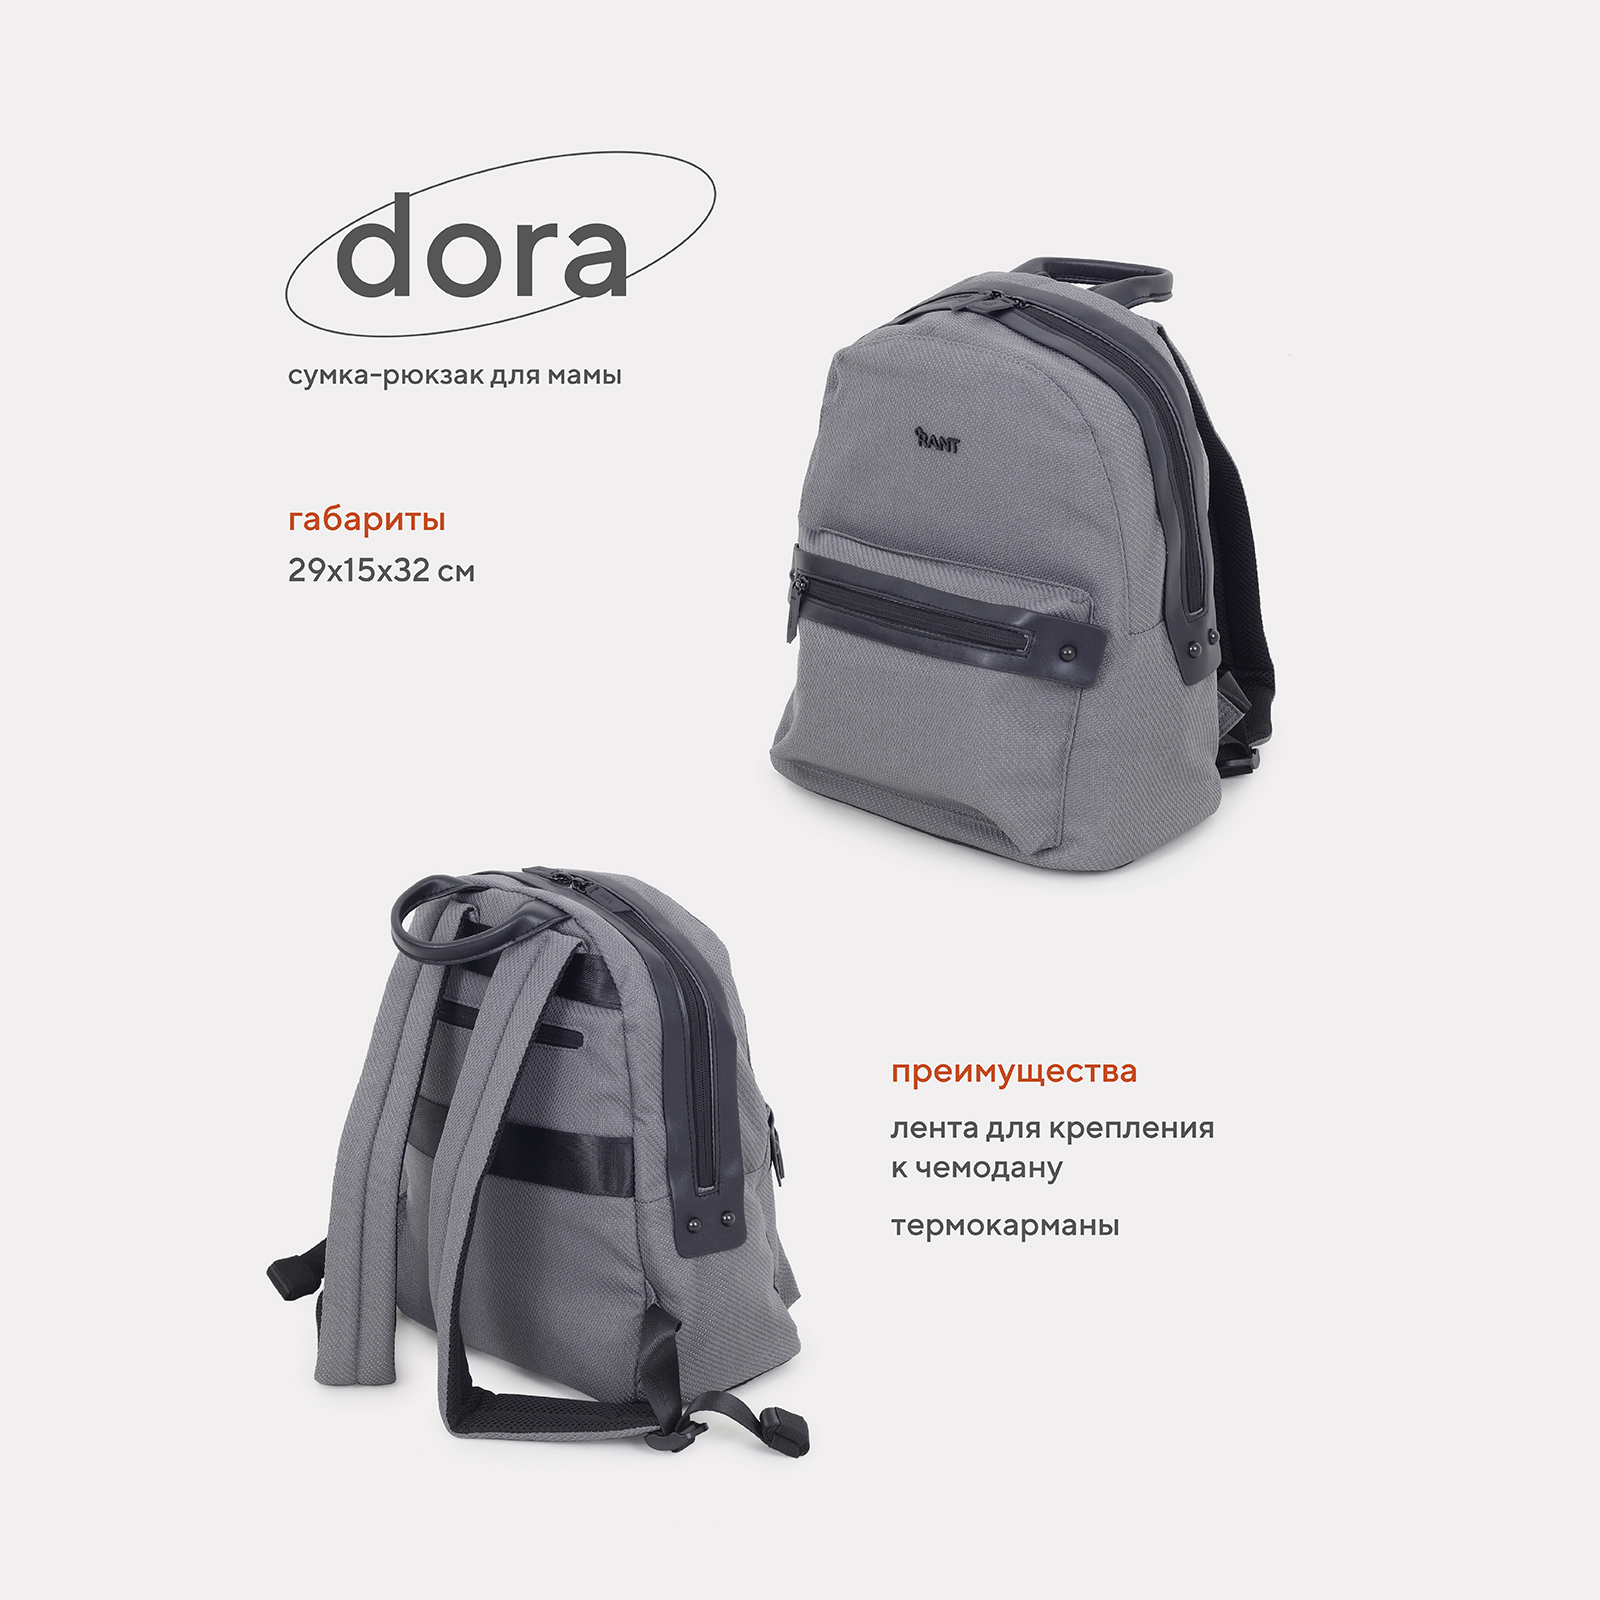 Сумка-рюкзак для мамы RANT Dora RB009 Grey рюкзак lowepro pro trekker bp 350 aw ii grey 97316